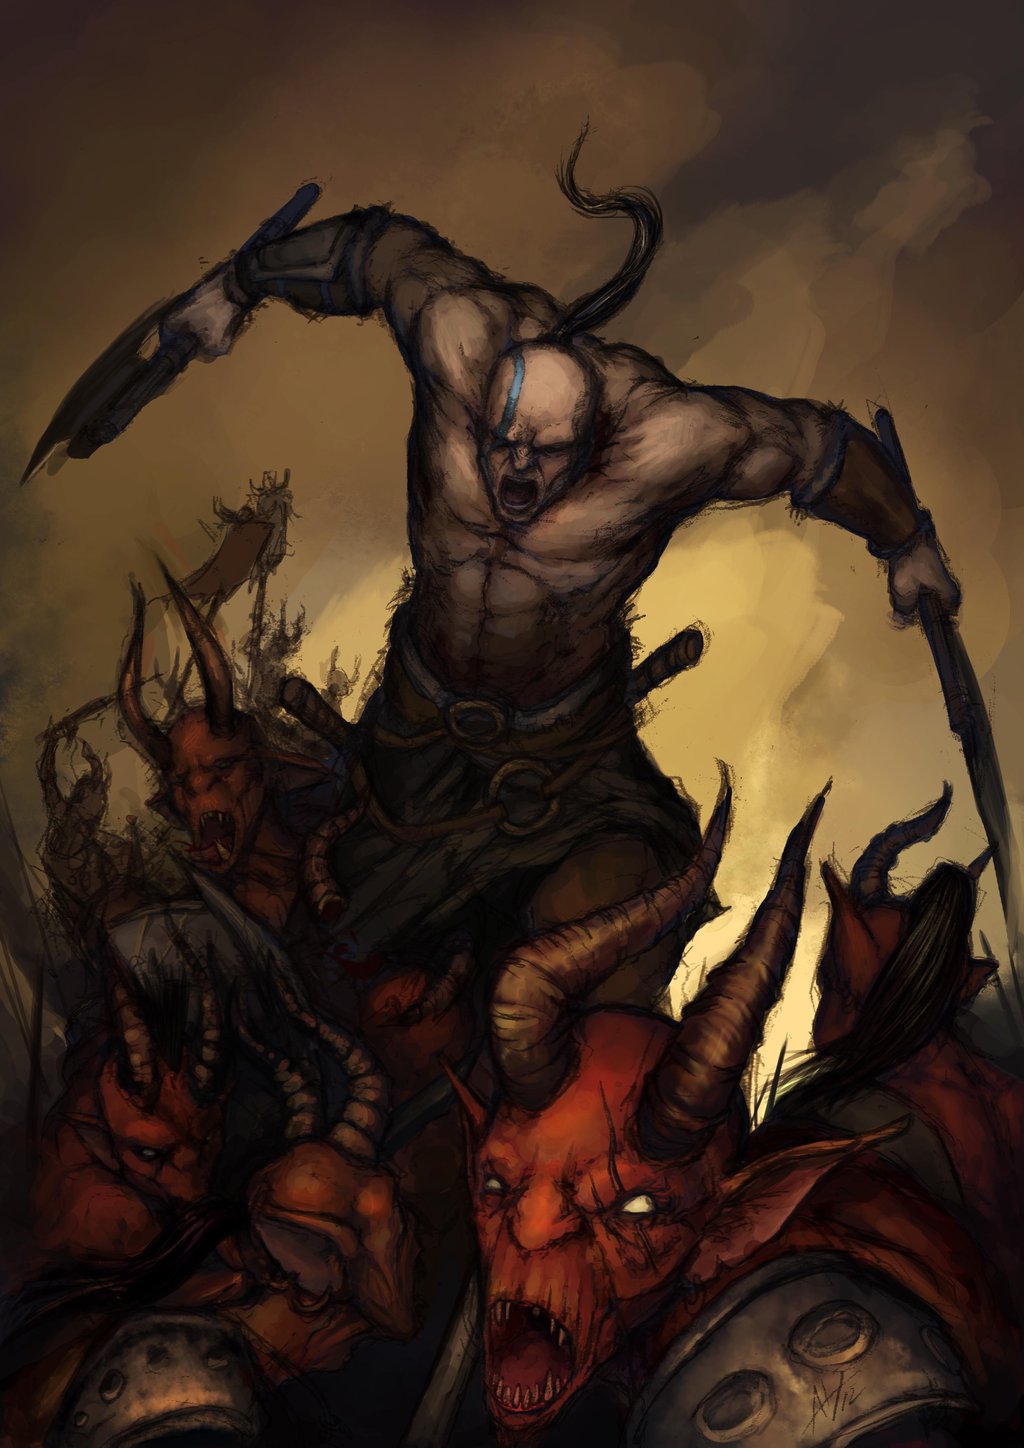 Diablo 2 Barbarian Tribute | PureDiablo - Diablo 4 Diablo franchise community